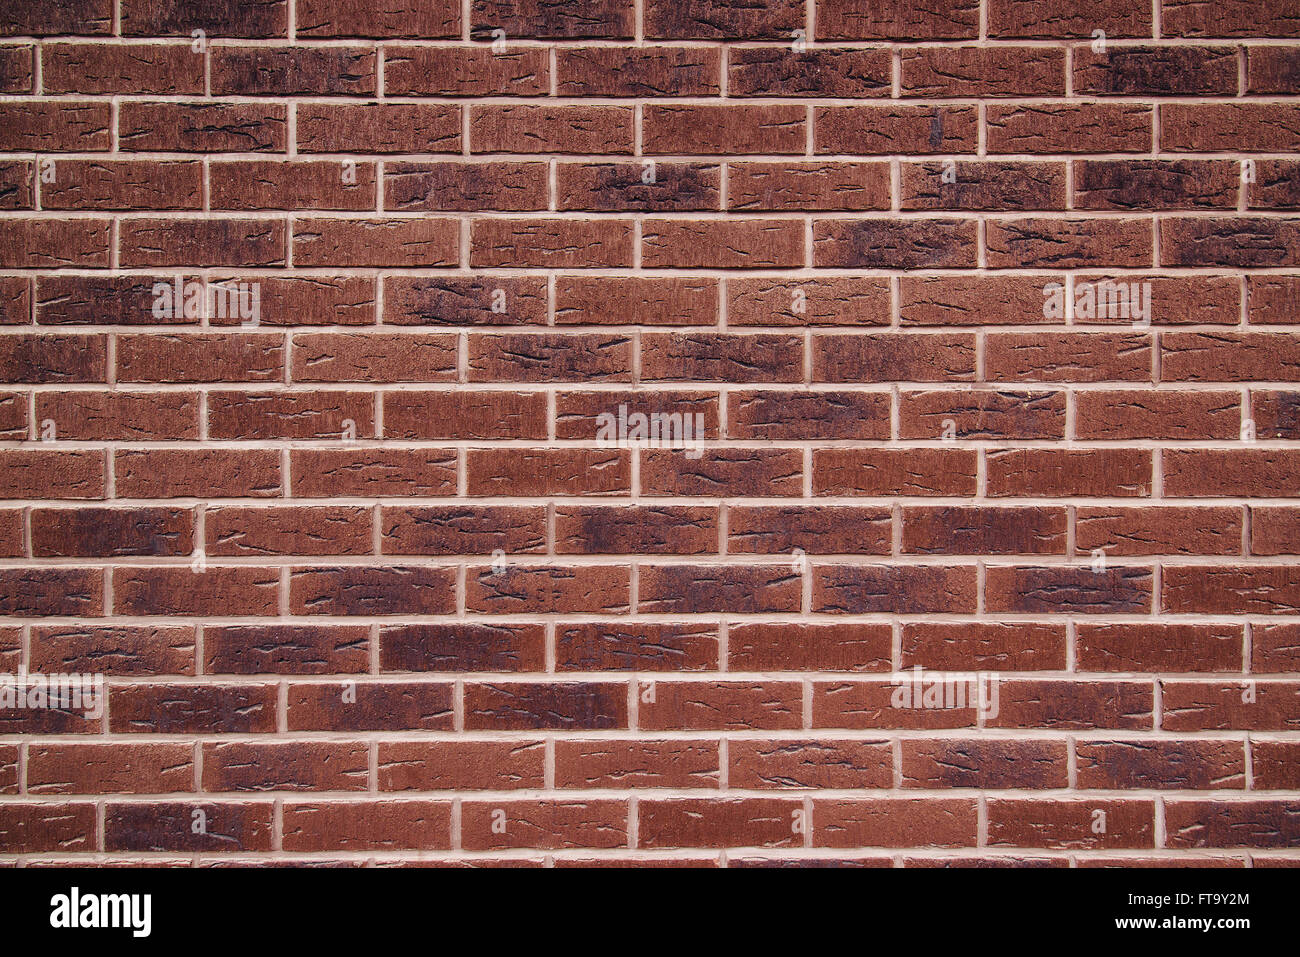 Exposed red brick wall texture, brickwork pattern Stock Photo